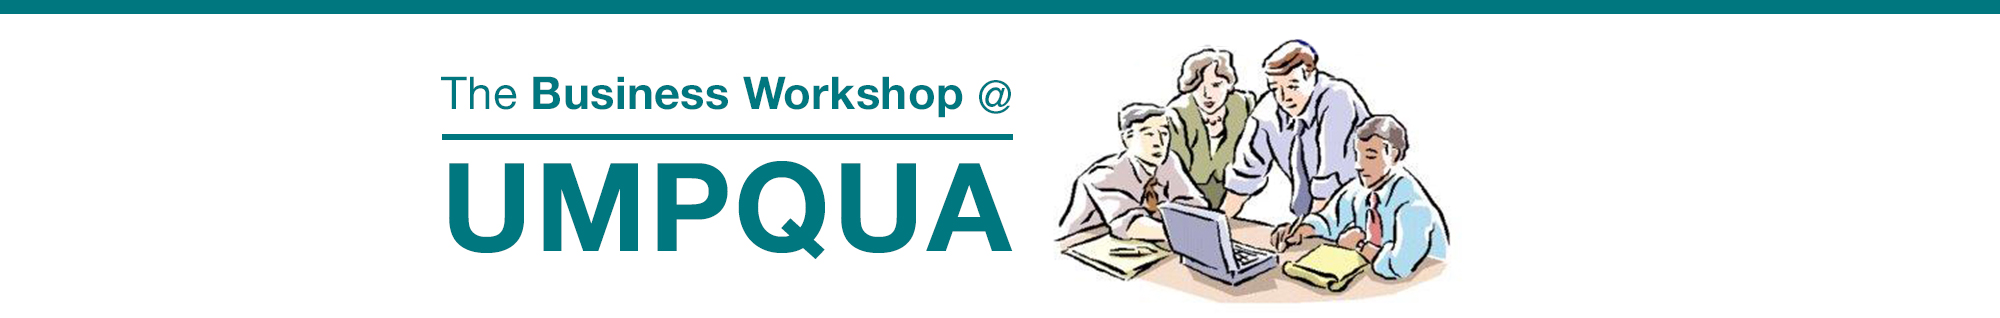 The Business Workshop @ Umpqua